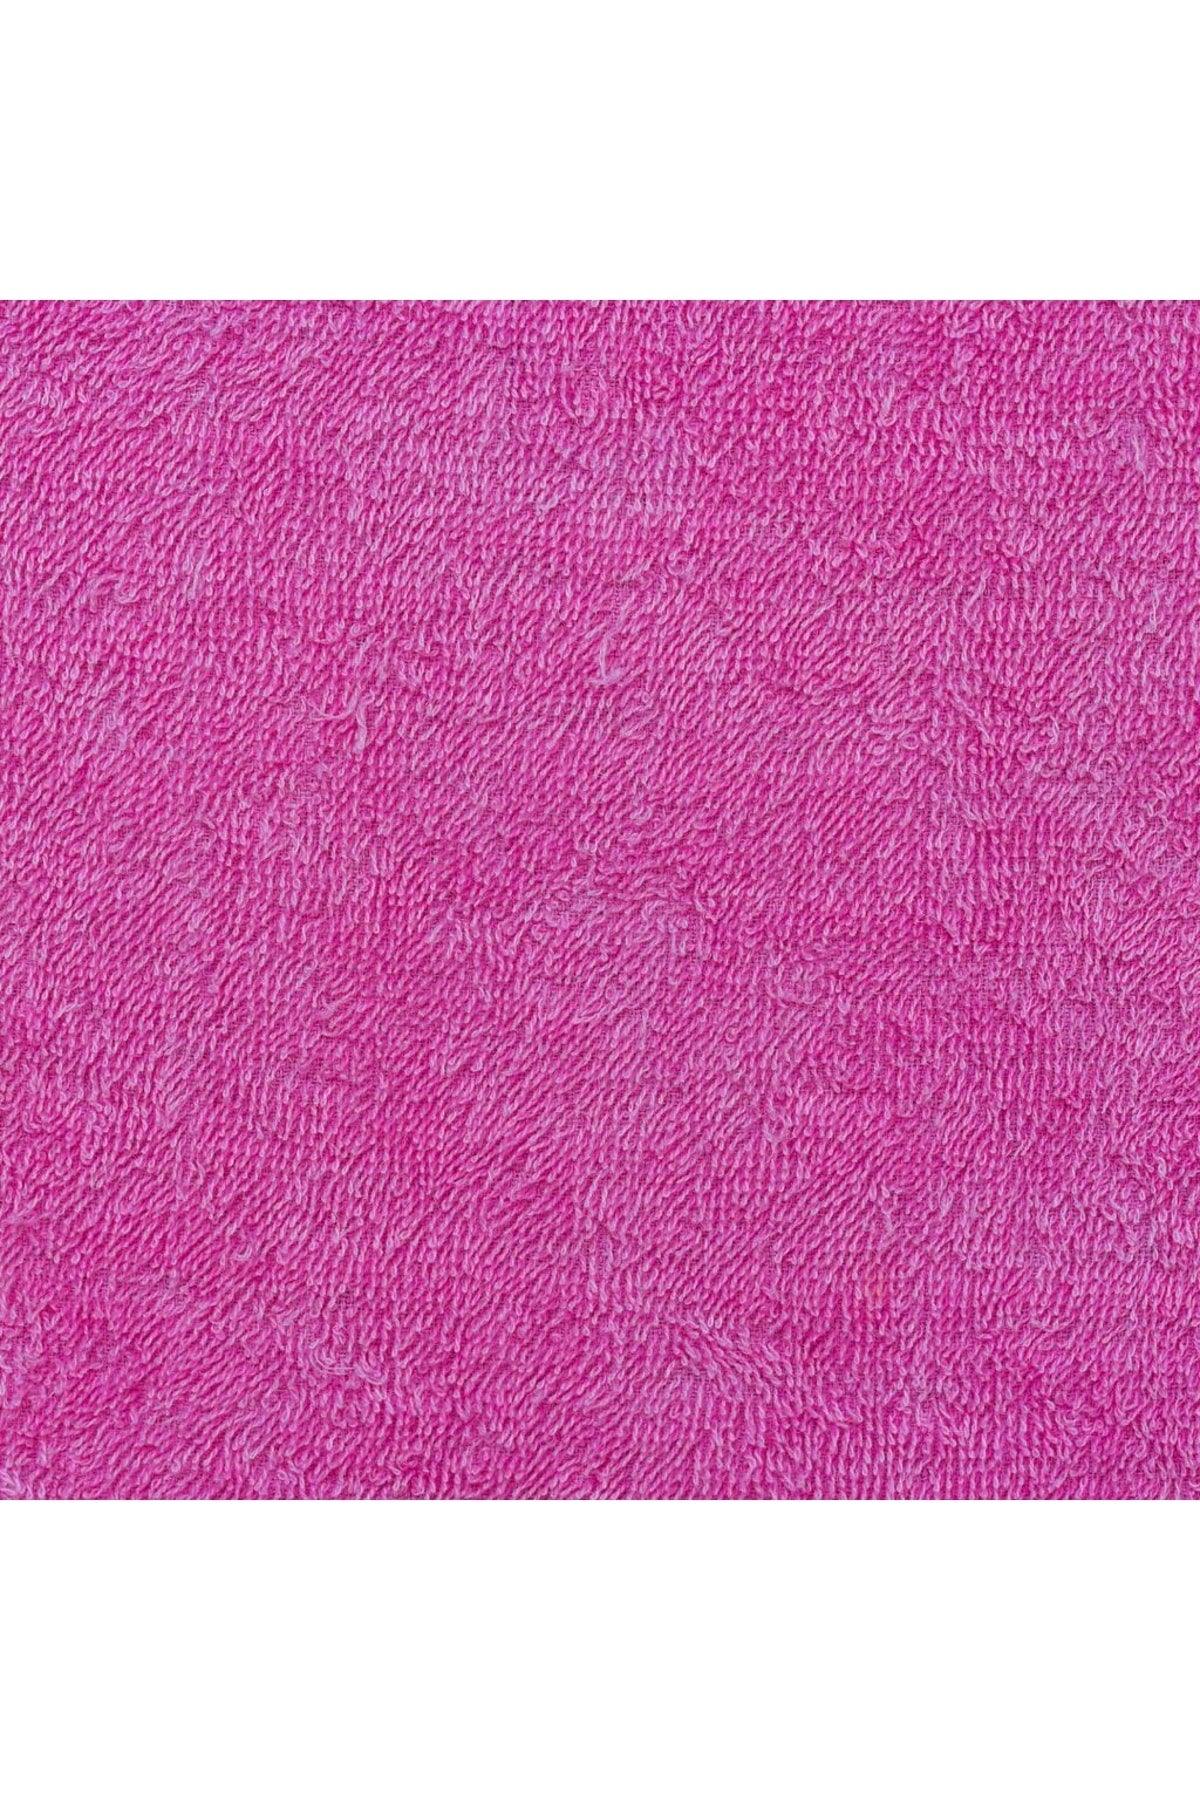 6 Pieces Candy Pink Towel Hand Face Towel 30x50 Soft Towel Set - Swordslife